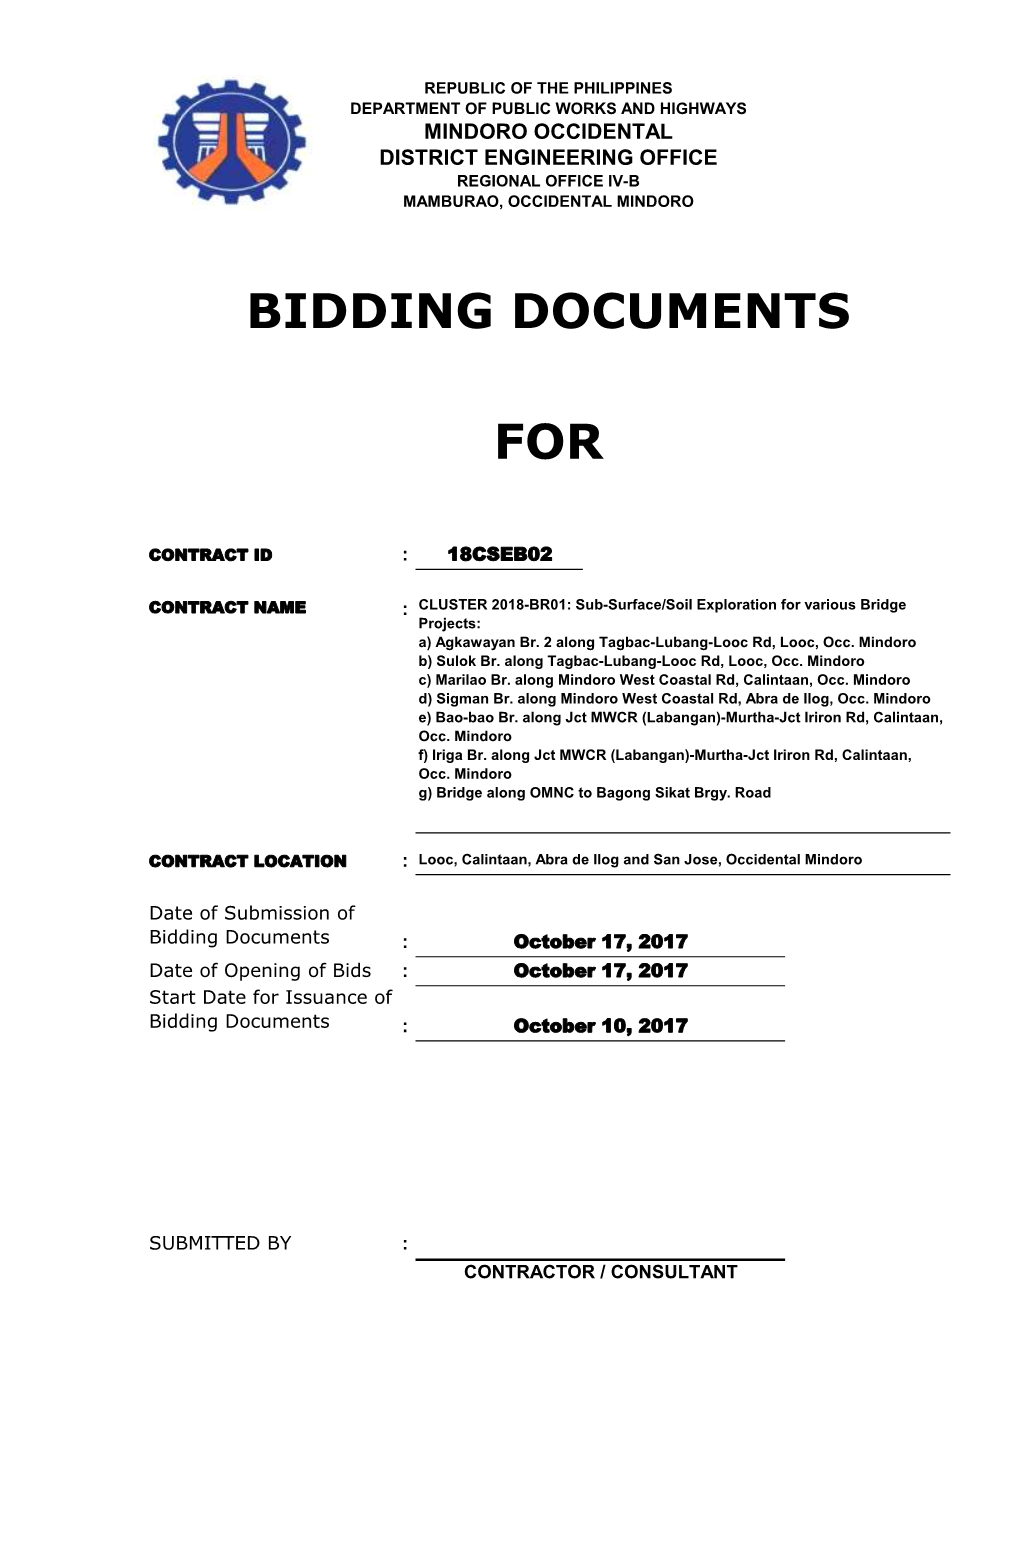 Philippine Bidding Documents